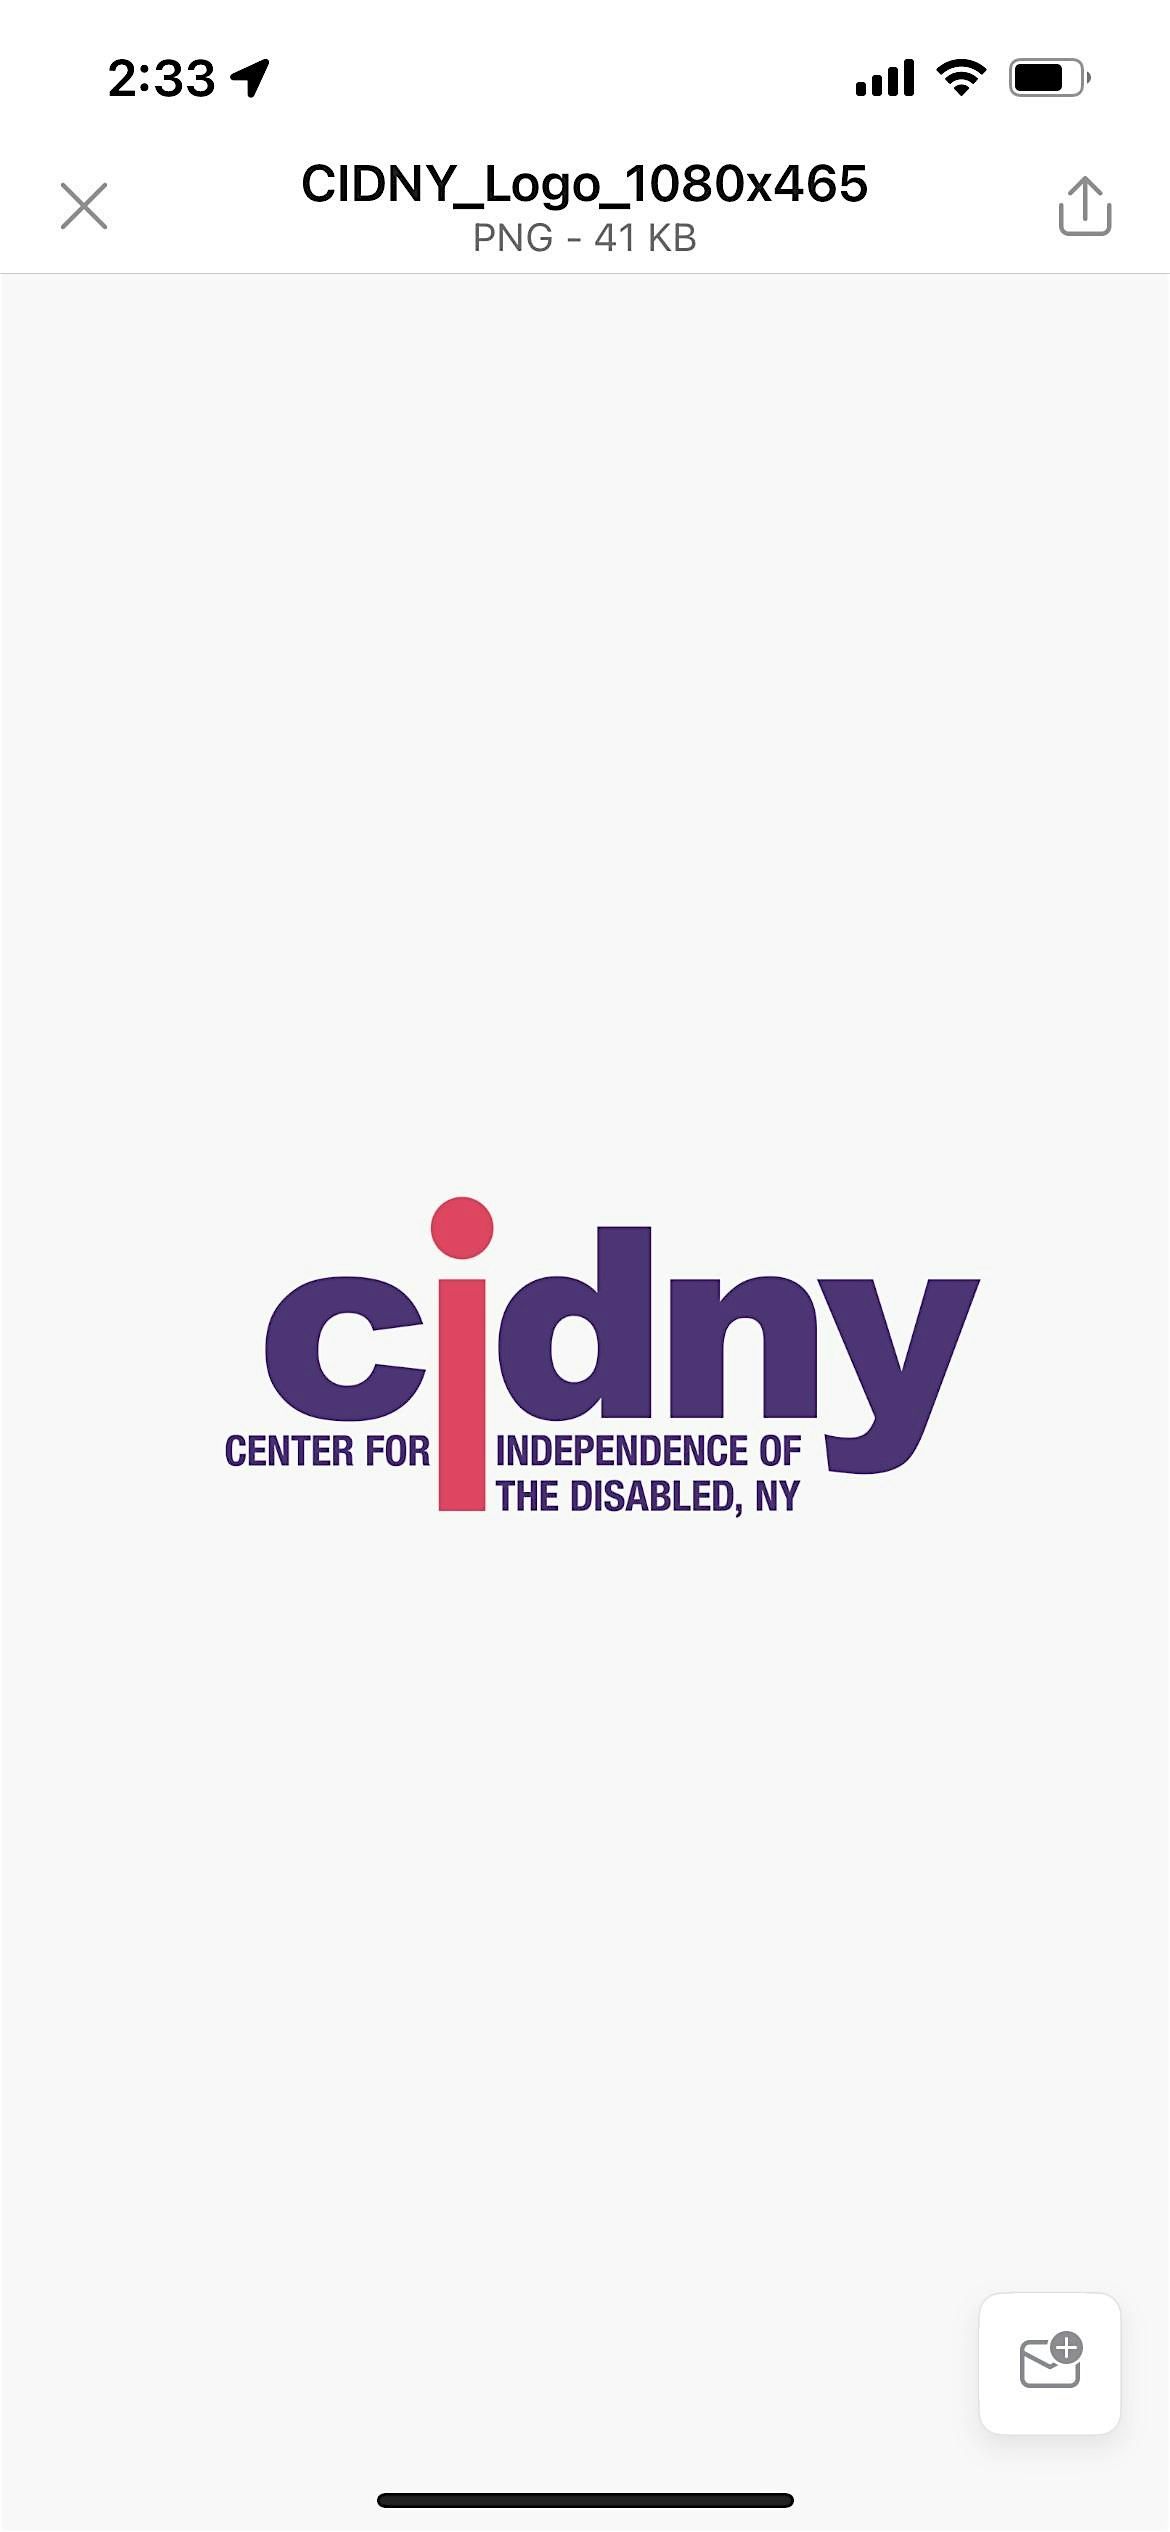 CIDNY's Annual Mental Health Fundraiser